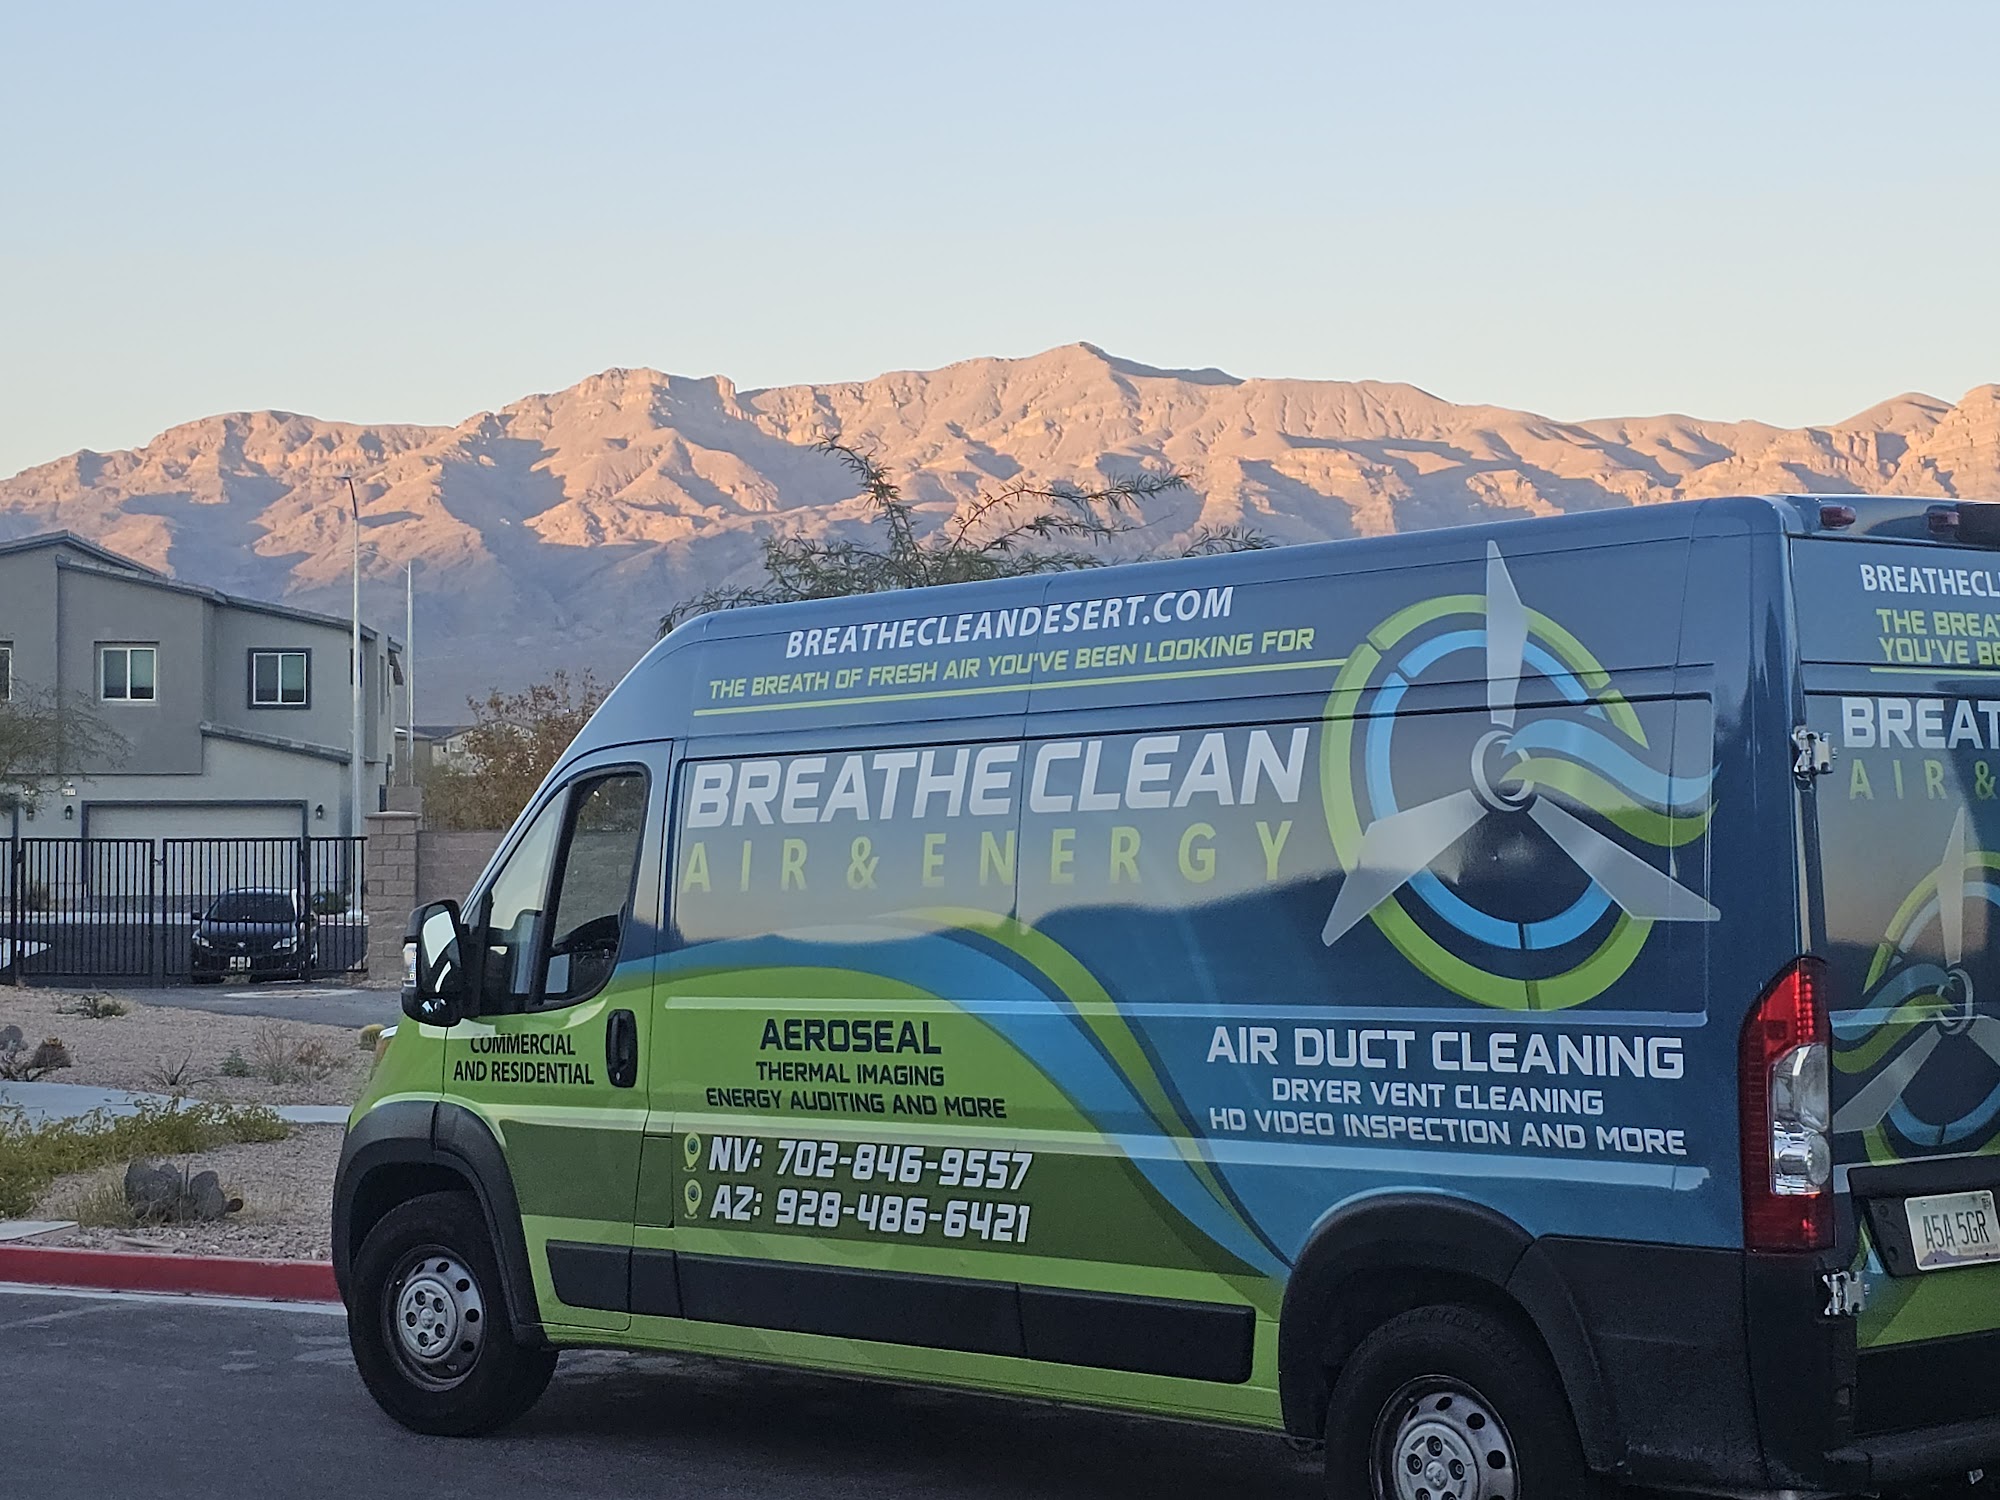 Breathe Clean Air & Energy